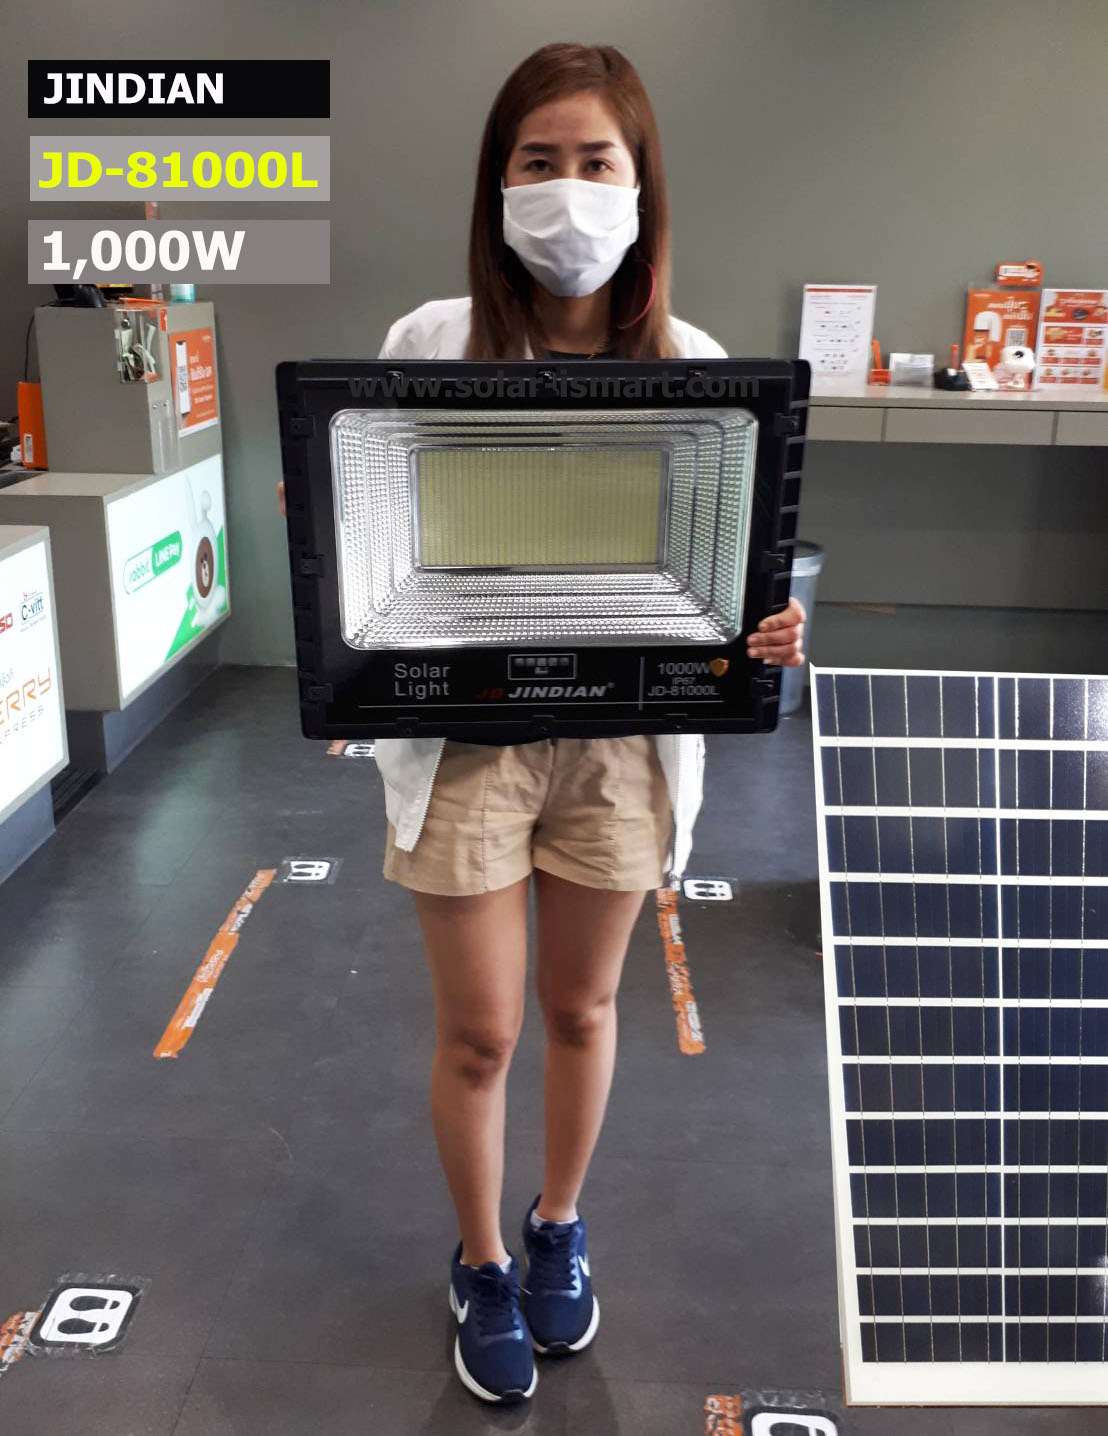 JD-81000L 1,000 วัตต์ Jindian  Solar Light ไฟสปอร์ตไลท์ โซล่าเซลล์ 